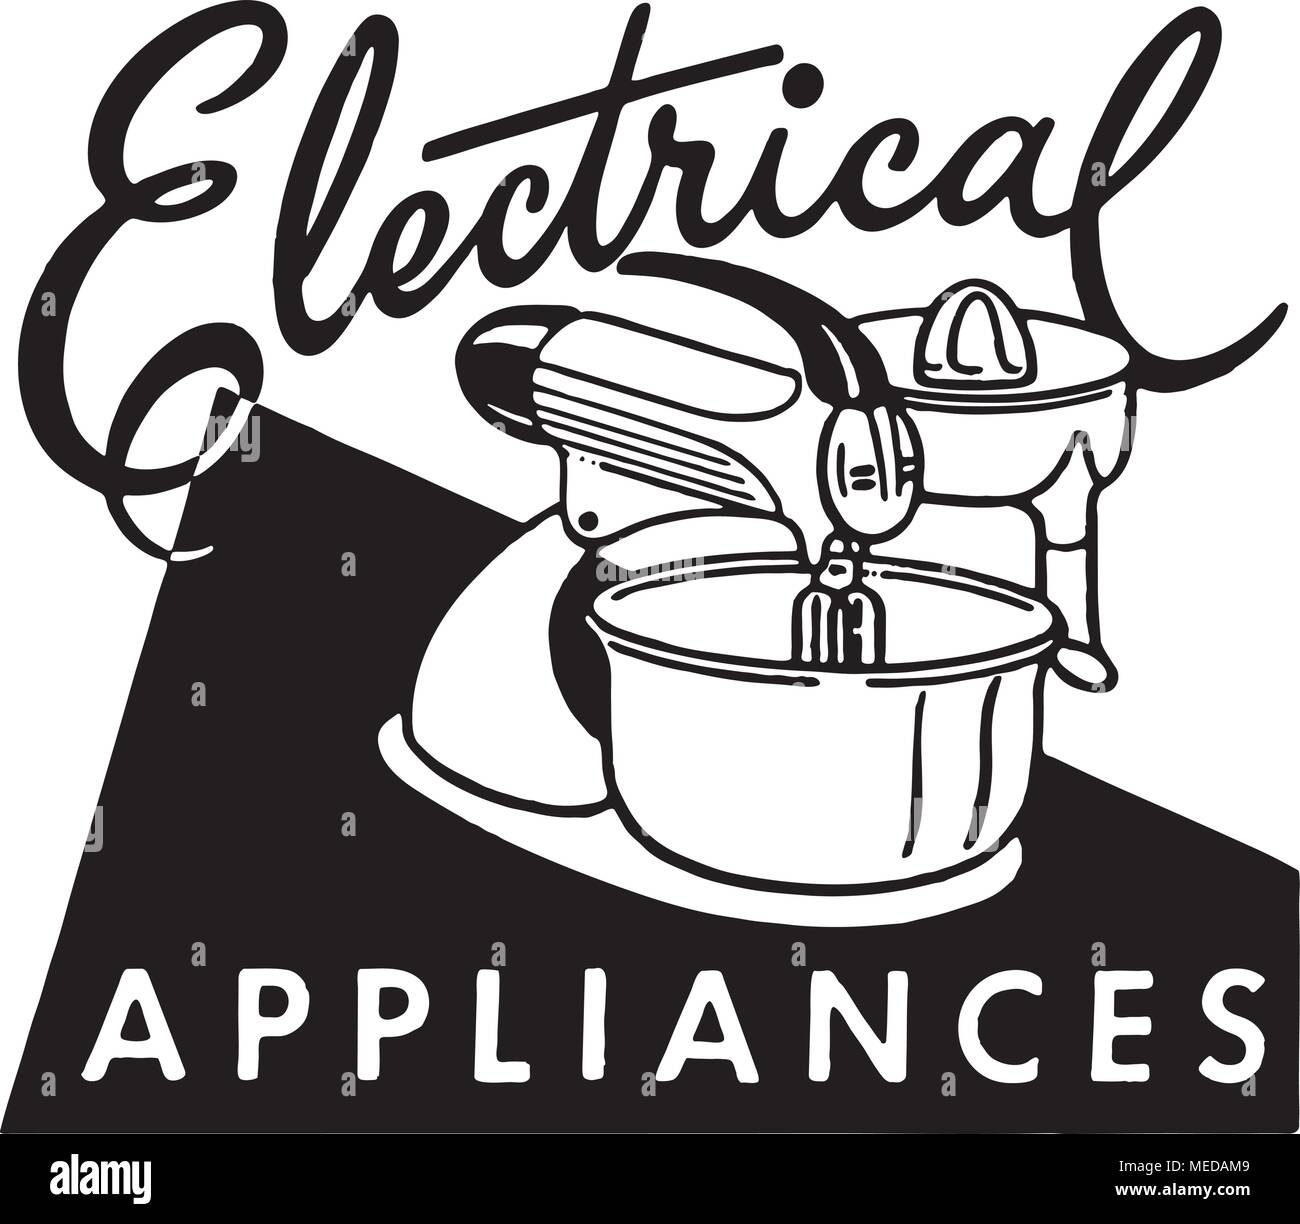 Electrical Appliances - Retro Ad Art Banner Stock Vector